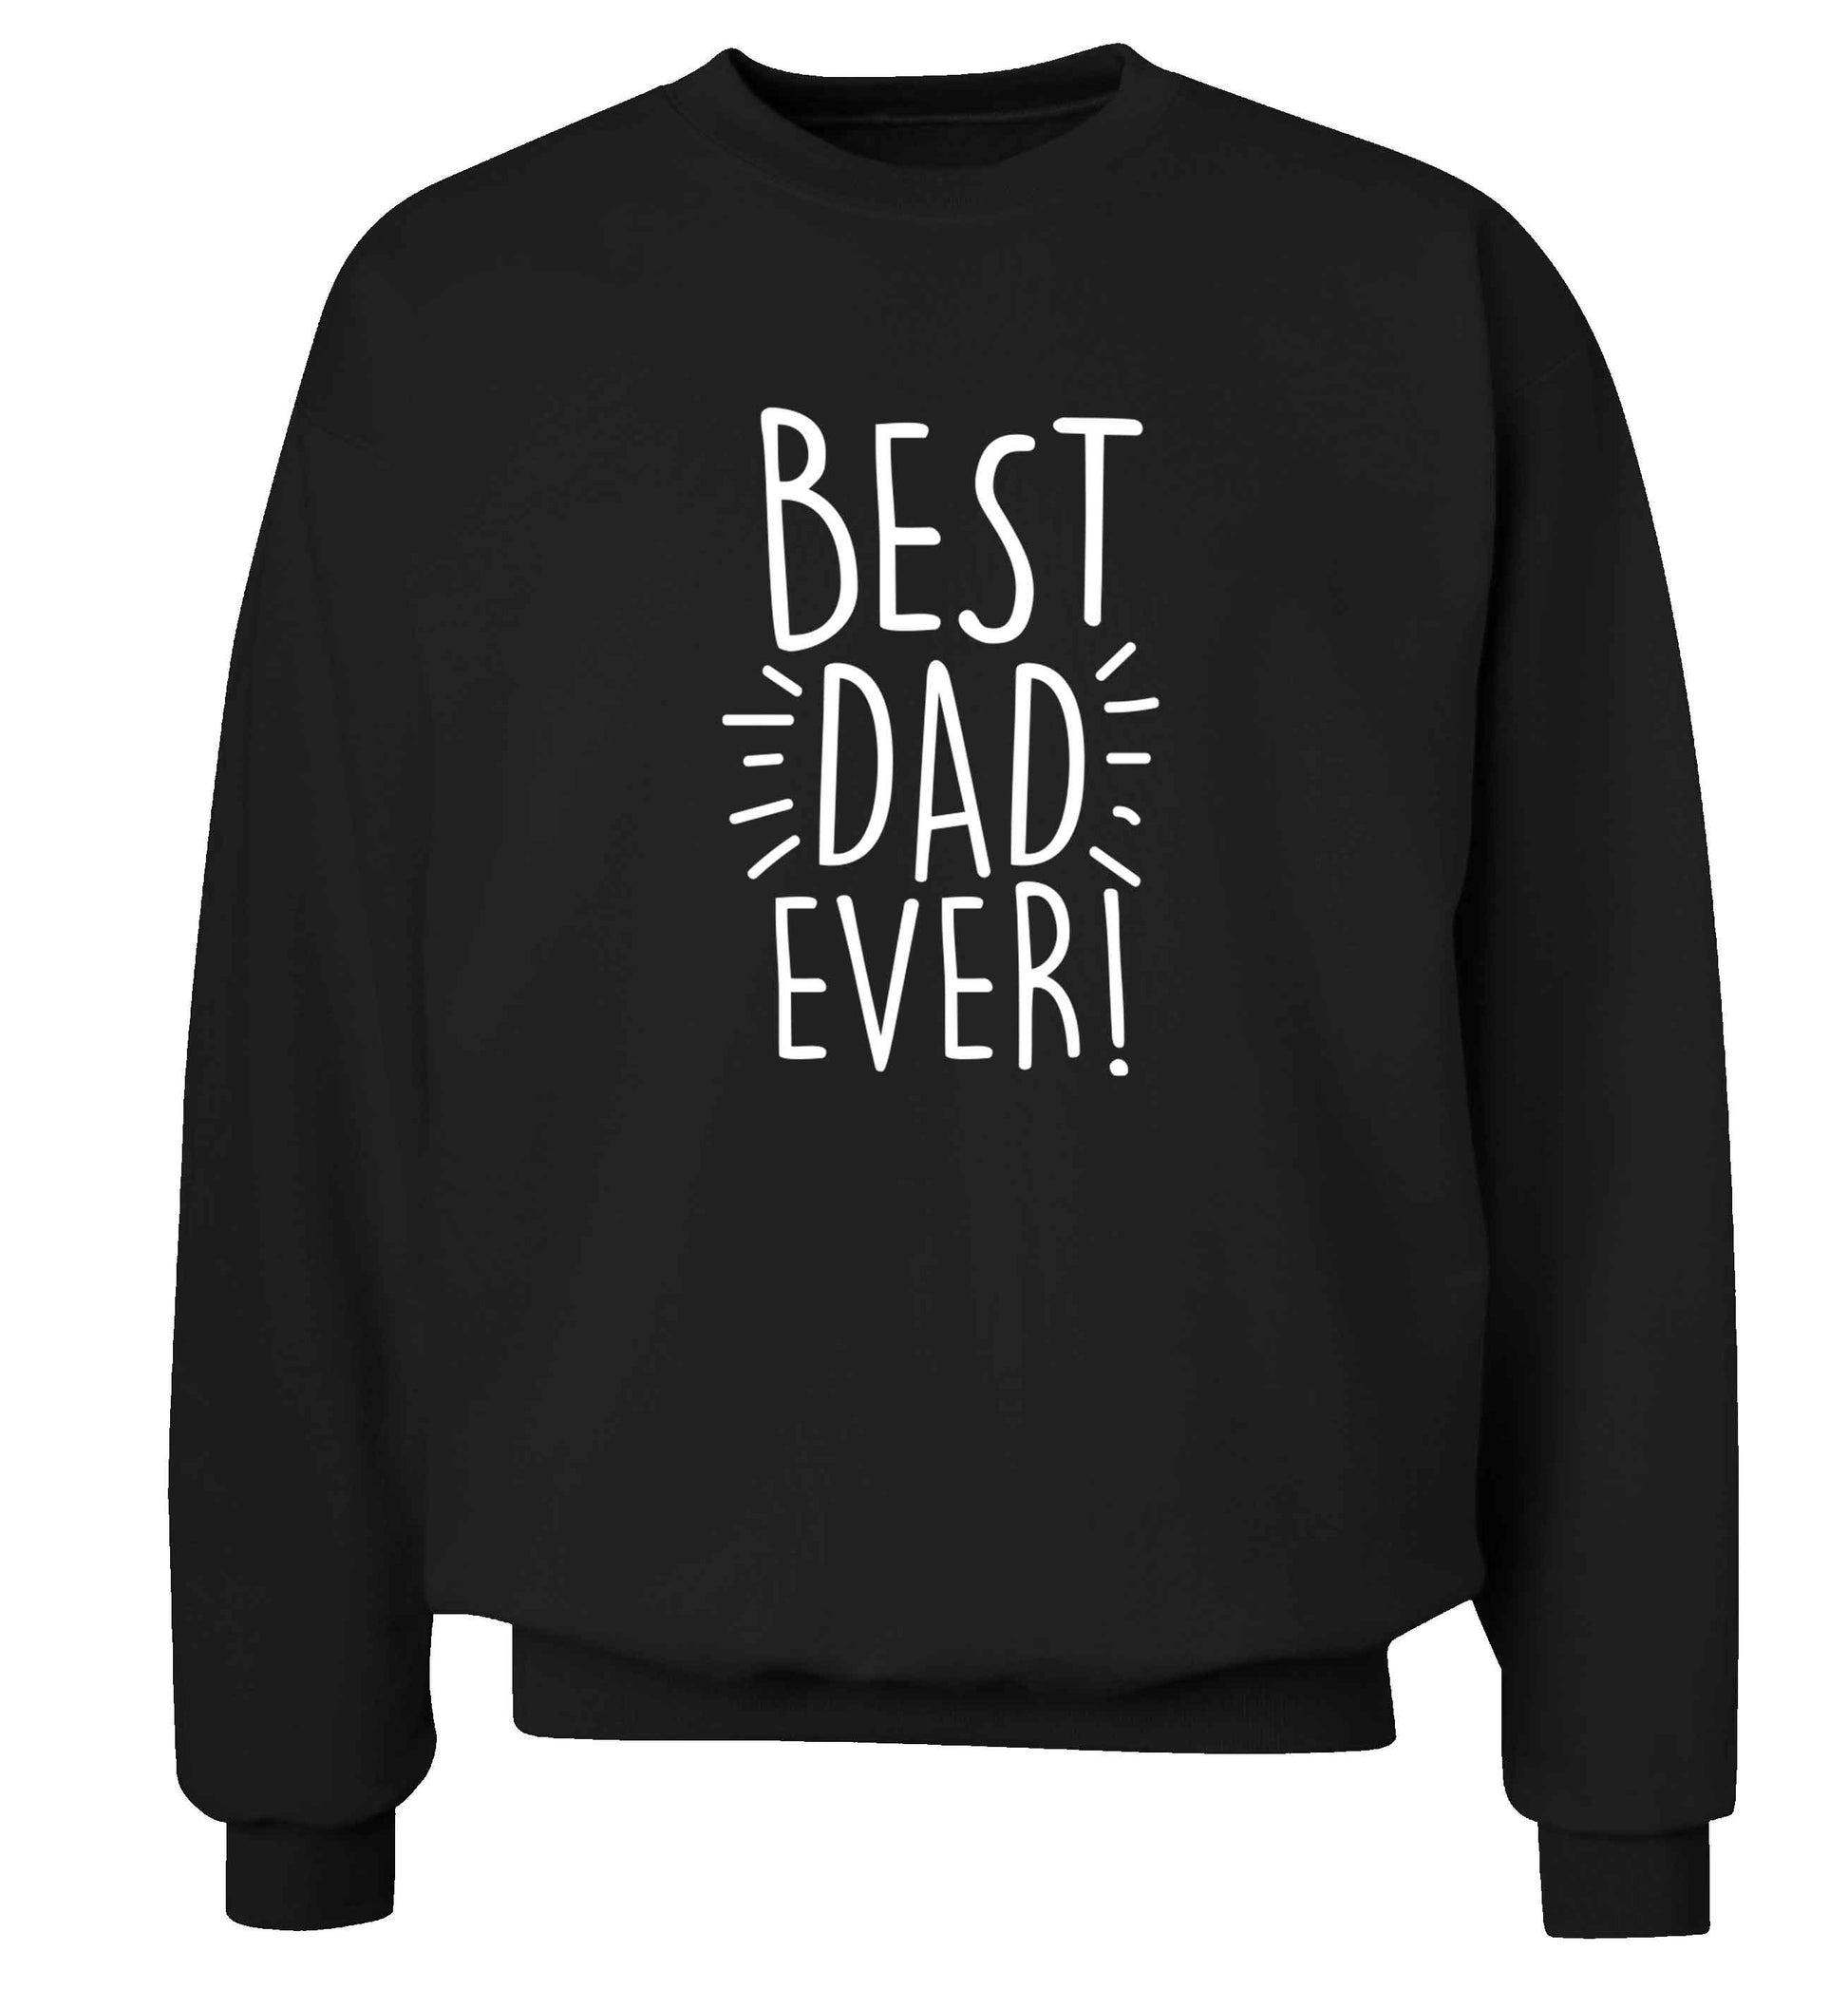 Best dad ever! adult's unisex black sweater 2XL